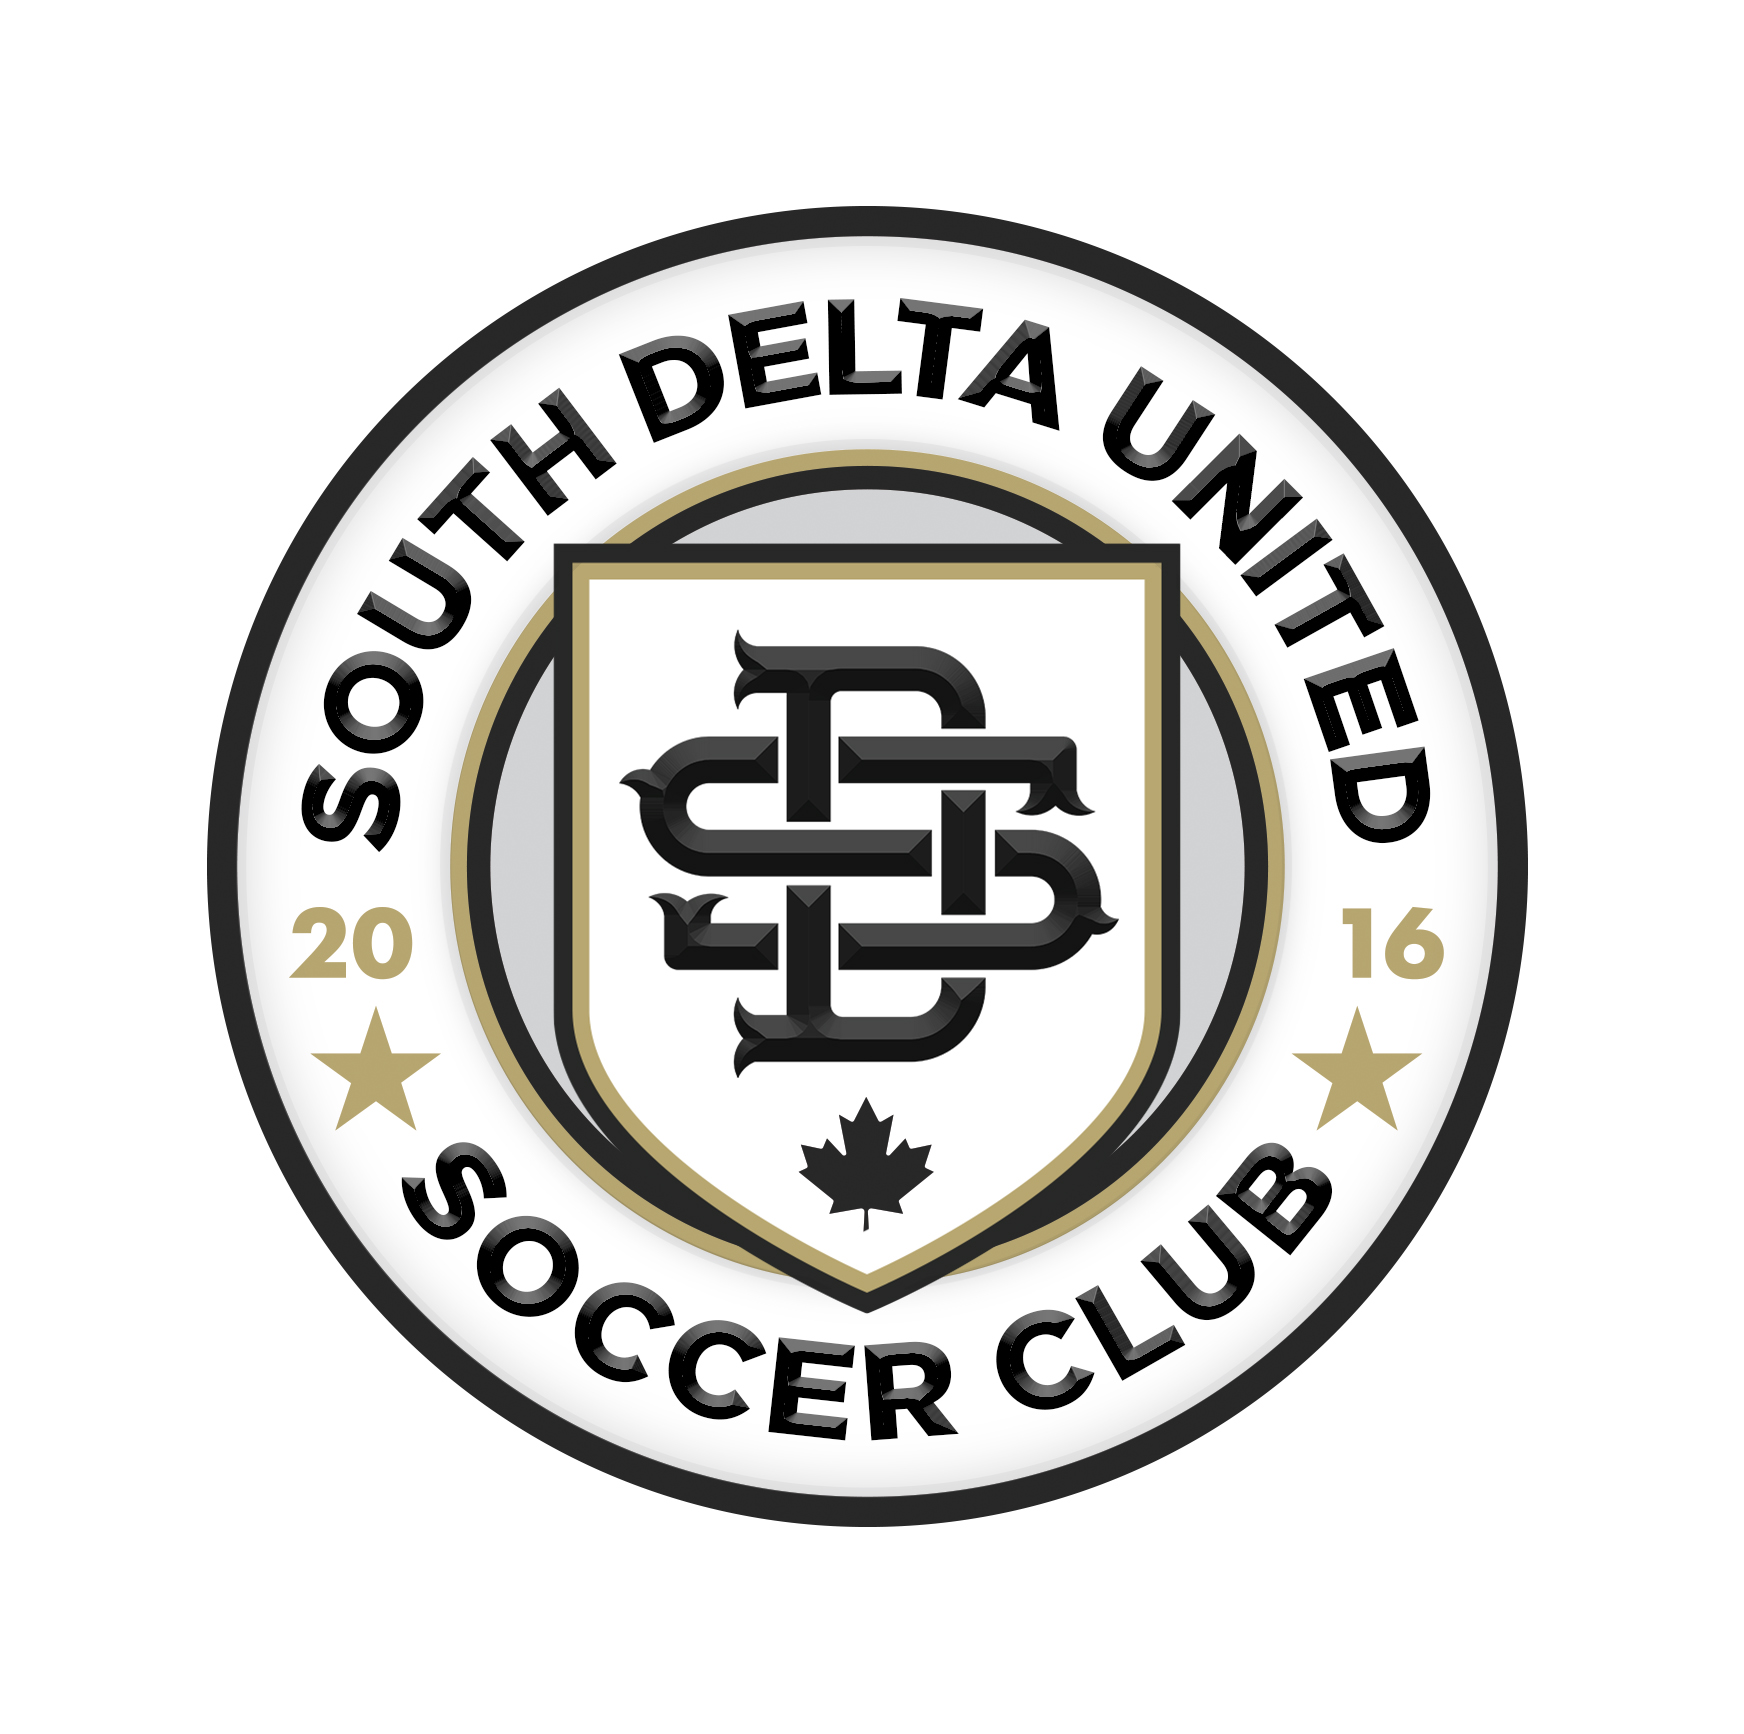 South Delta United Soccer Club